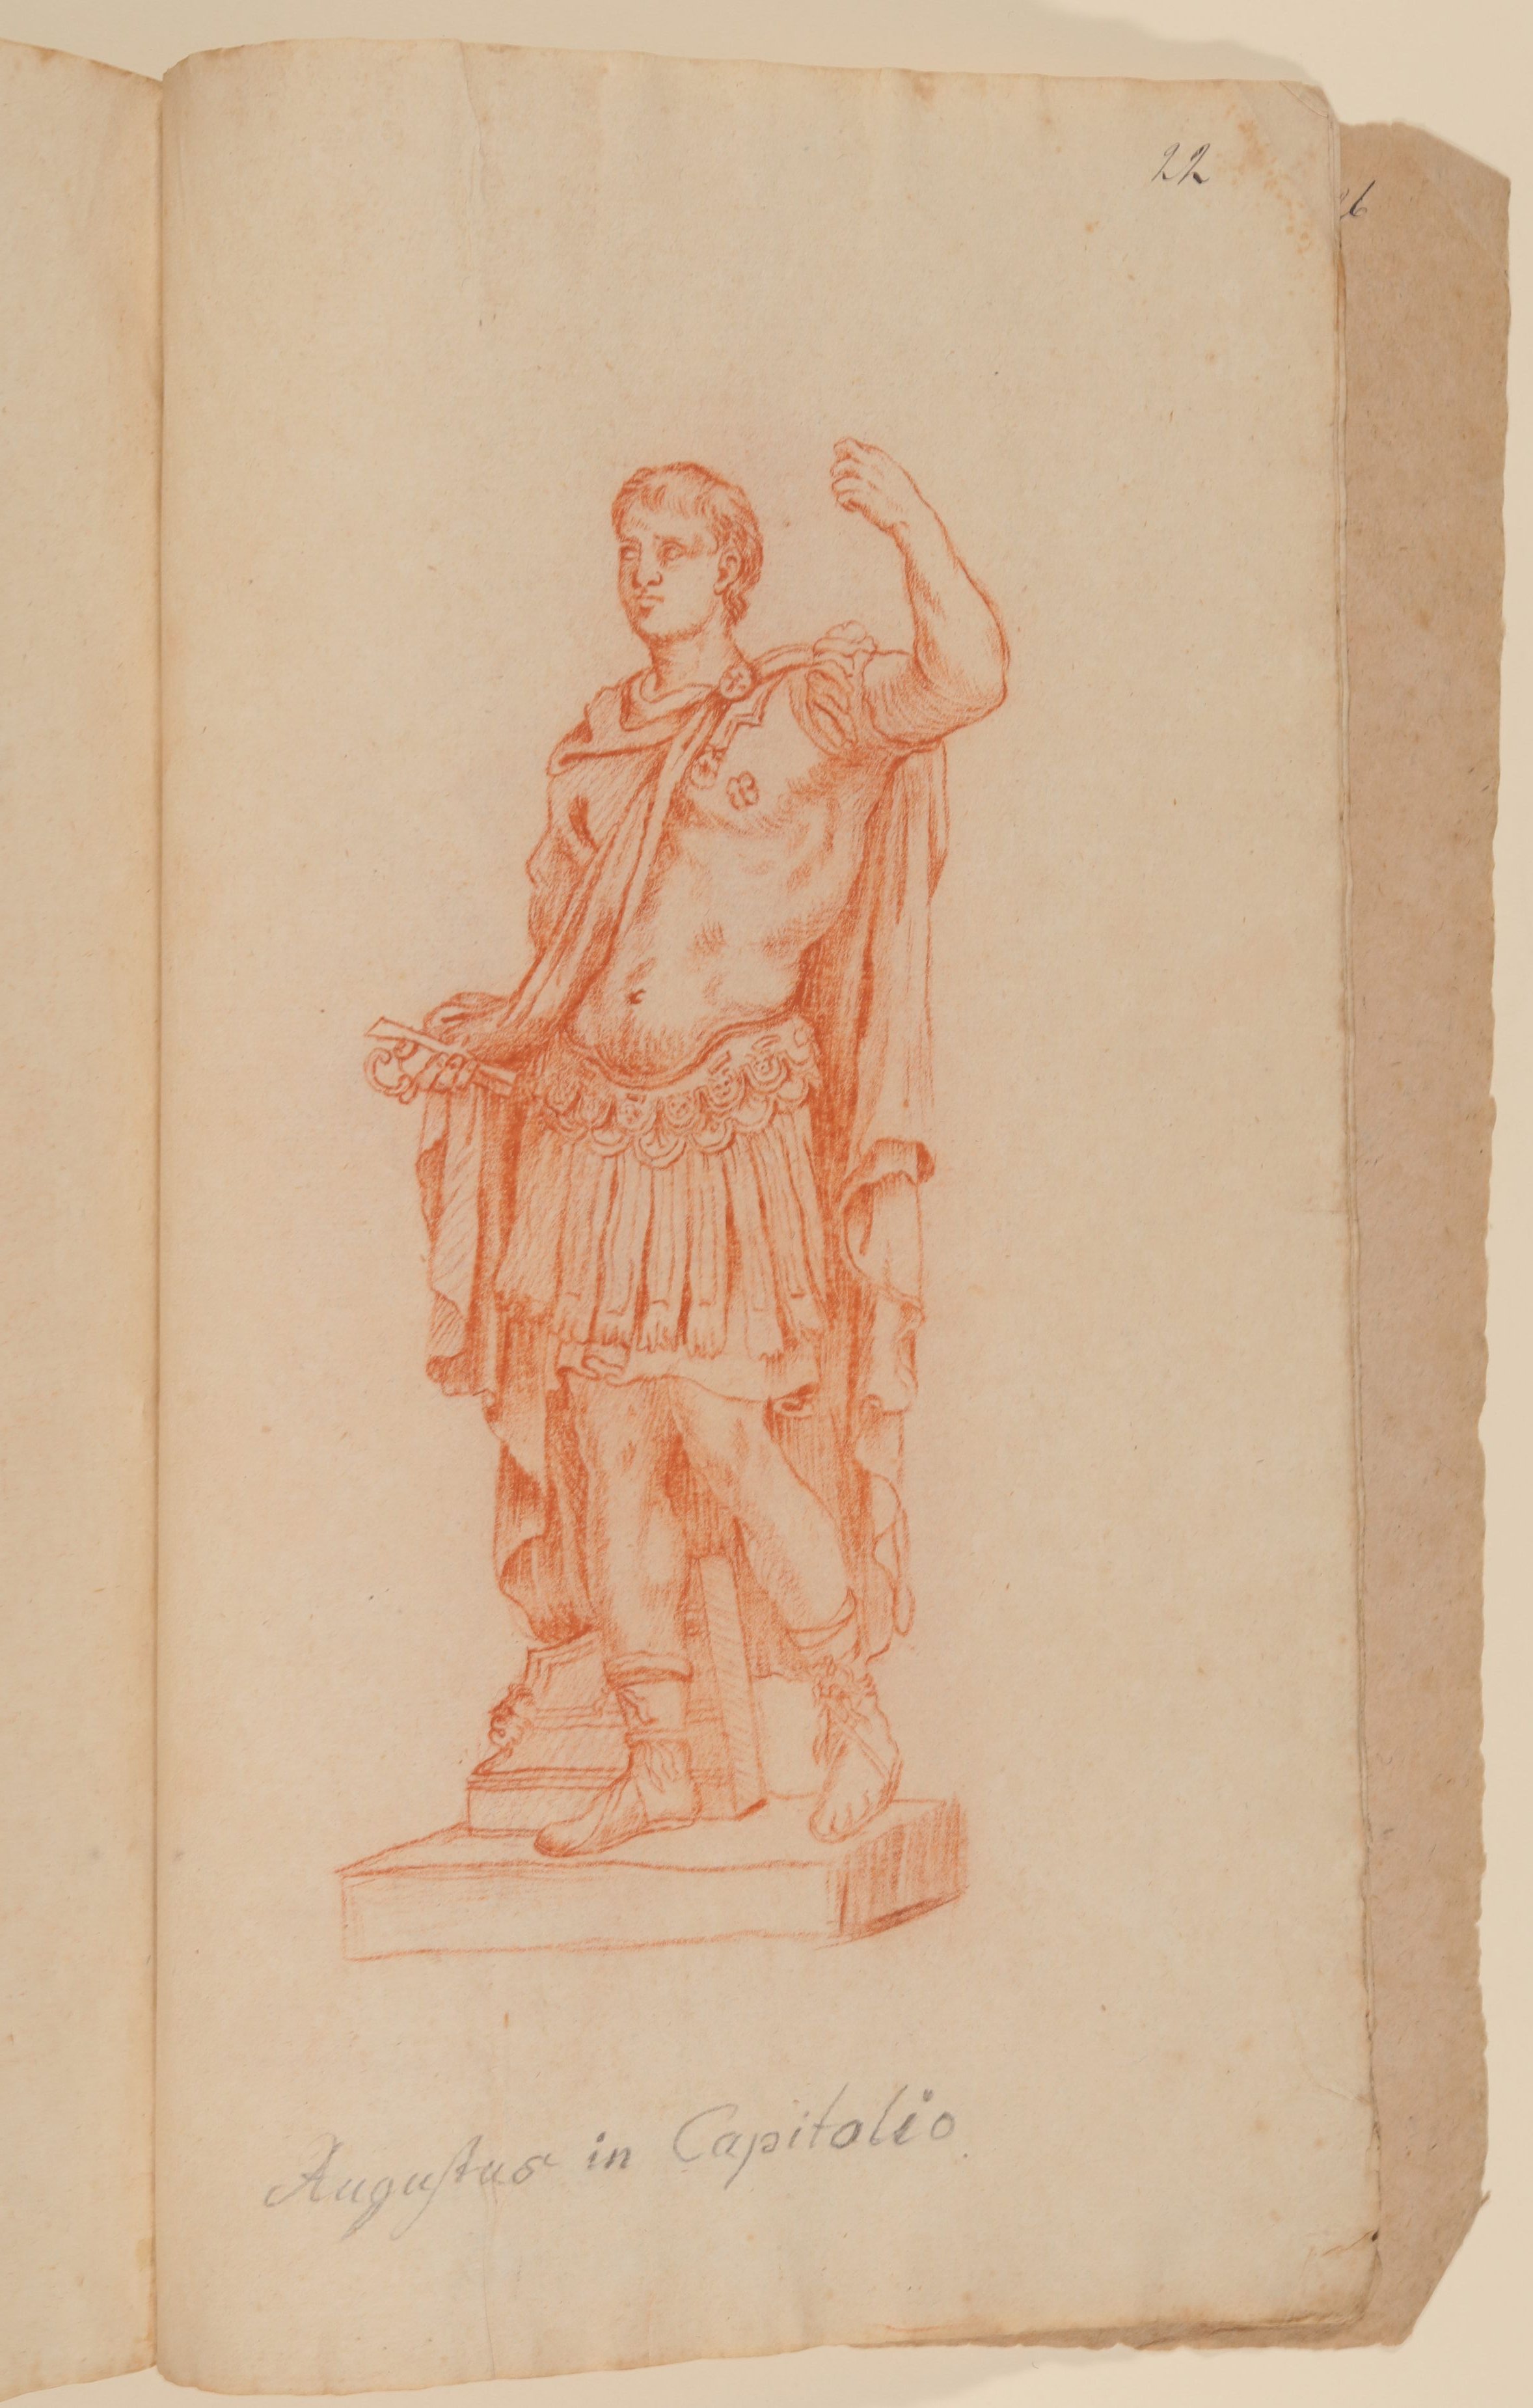 Augustus [nach Tafel 10 von François Perriers "Icones et Segmenta Nobilium Signorum et Statuarum..." (1638)] (Freies Deutsches Hochstift CC BY-NC-SA)